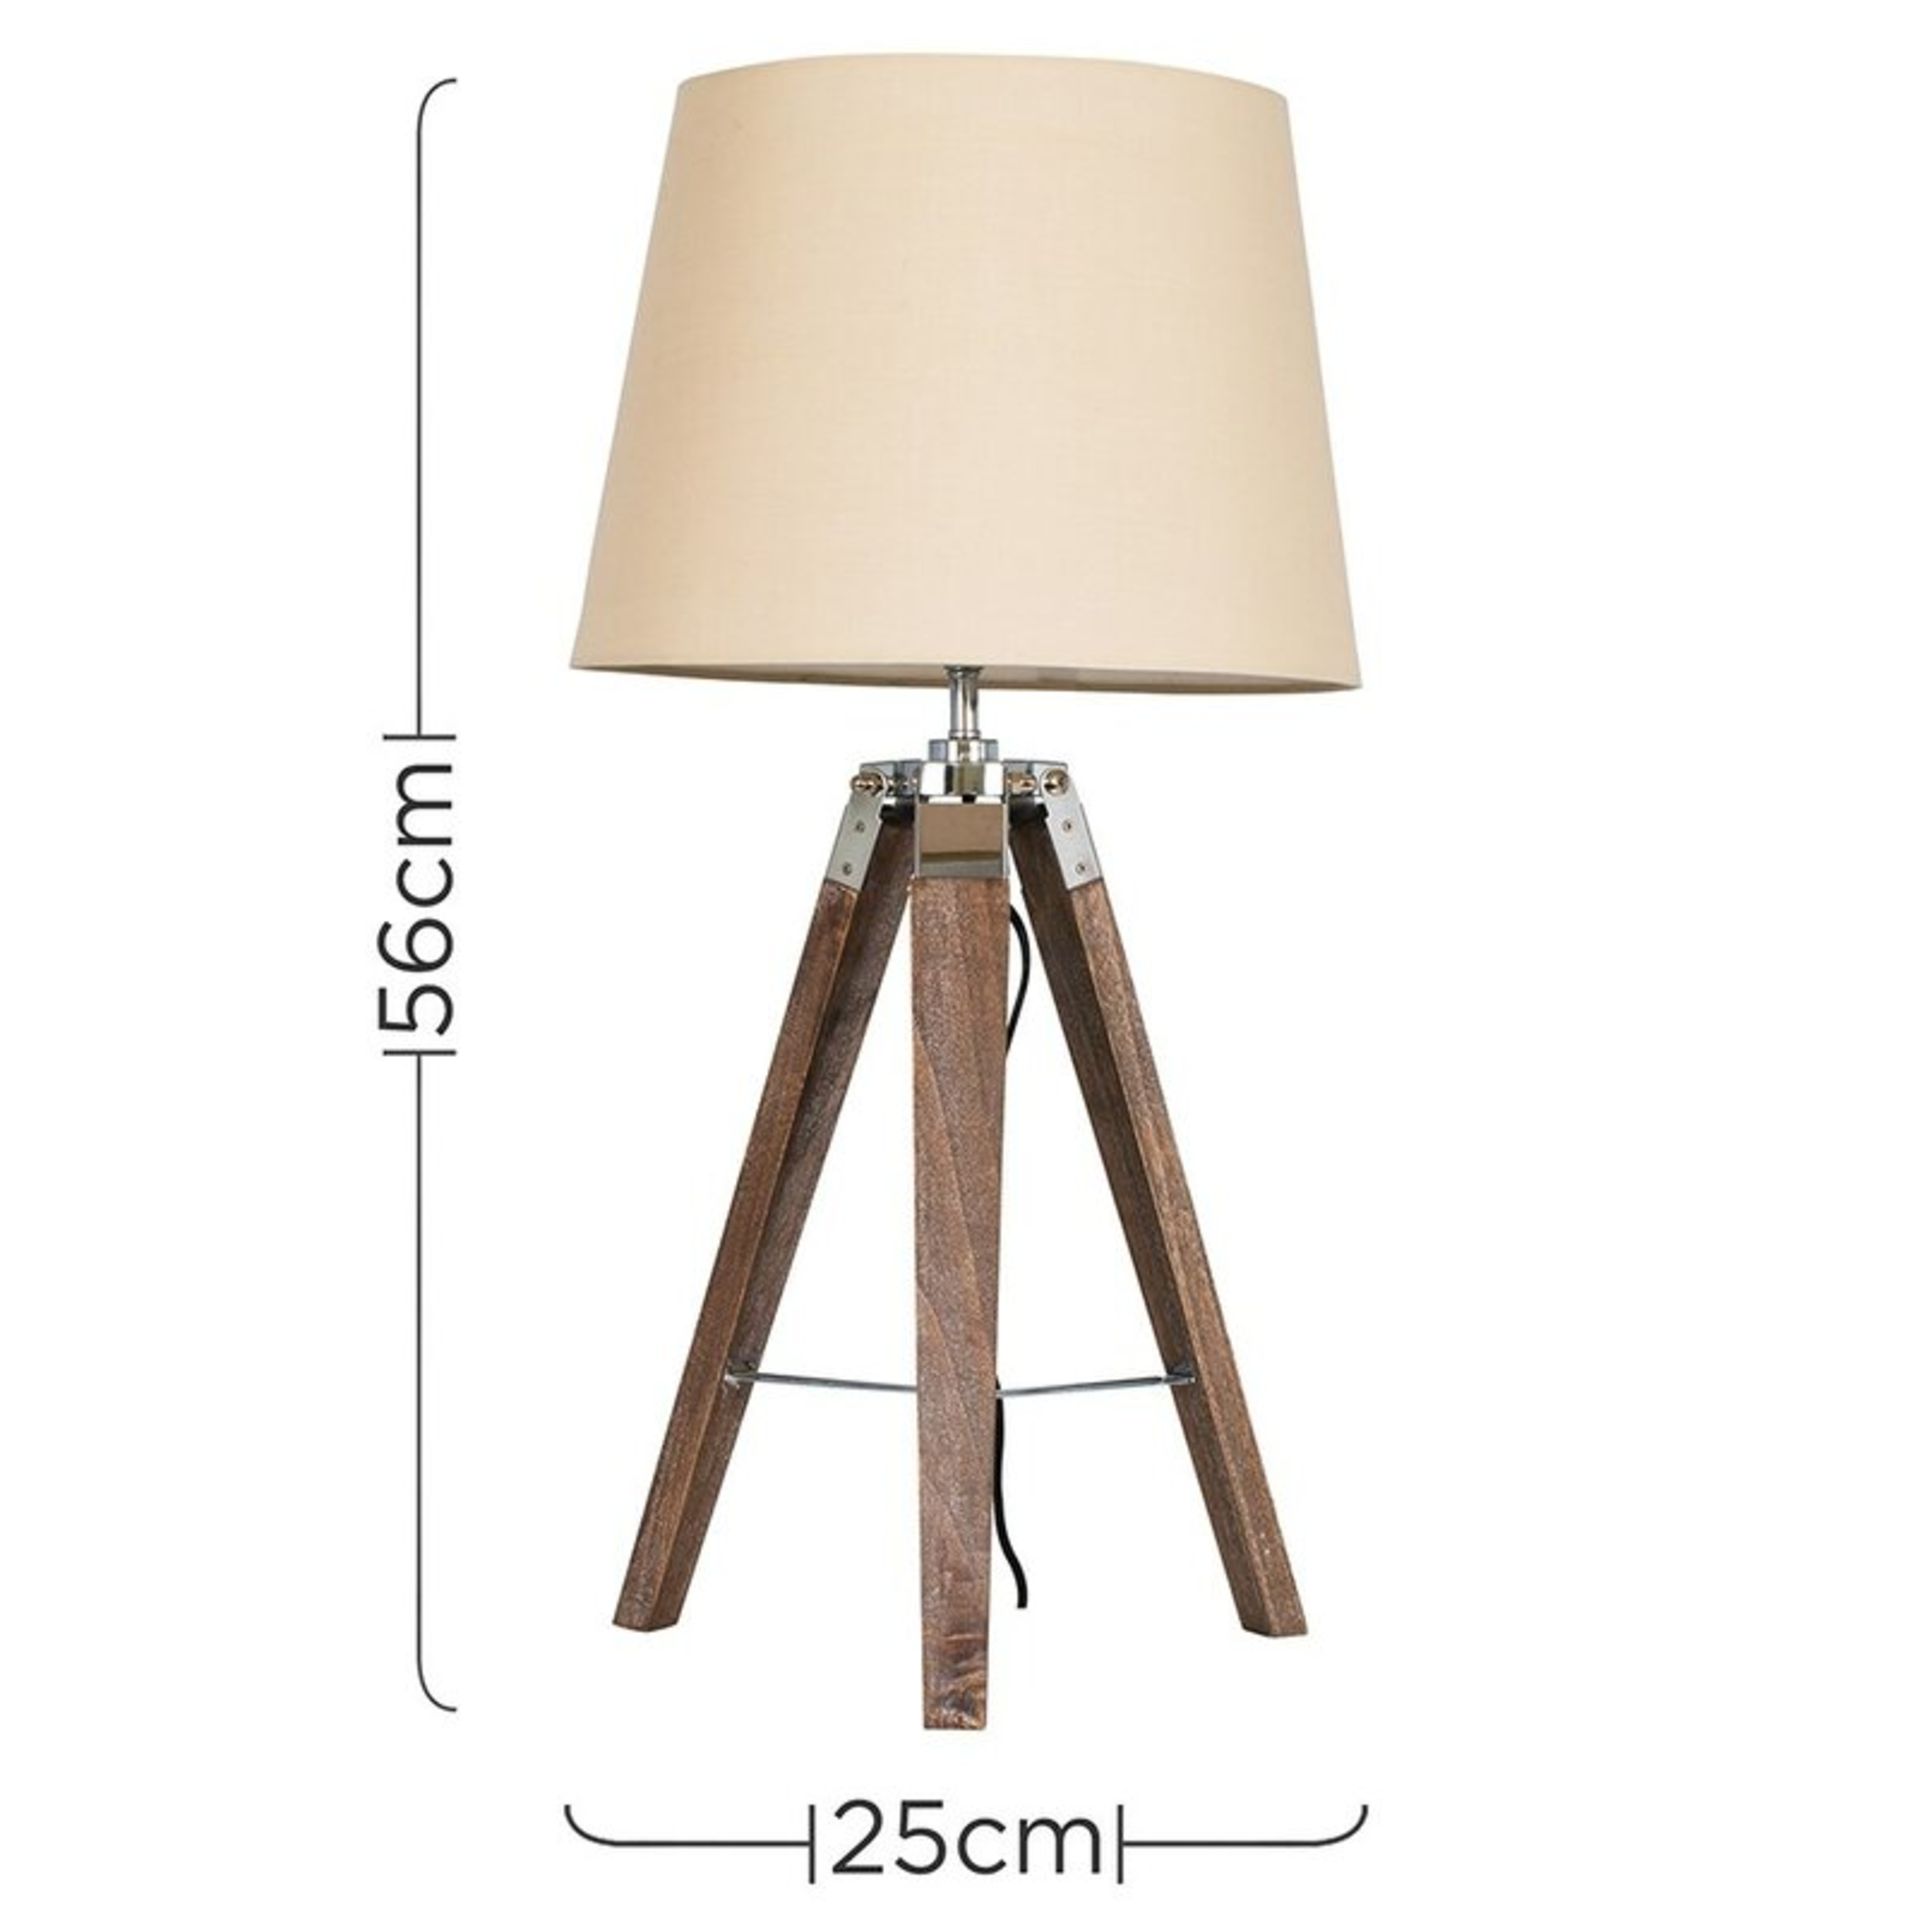 Bella Vista 69cm Tripod Table Lamp Set (Set of 2) - RRP £73.99 - Image 2 of 2